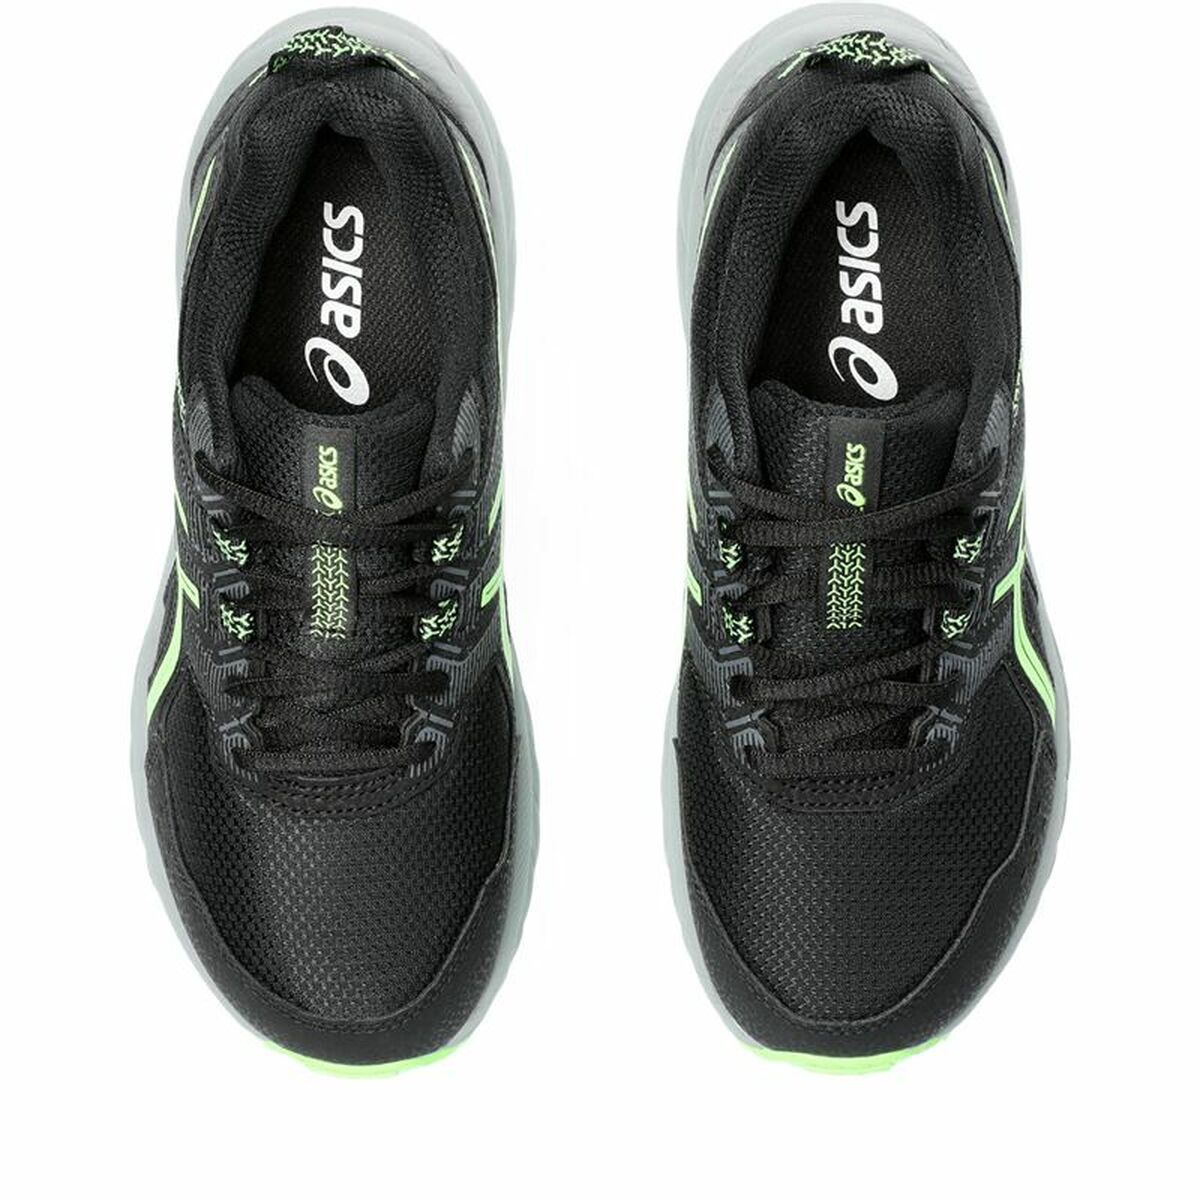 Running Shoes for Kids Asics Pre Venture 9 Gs Black